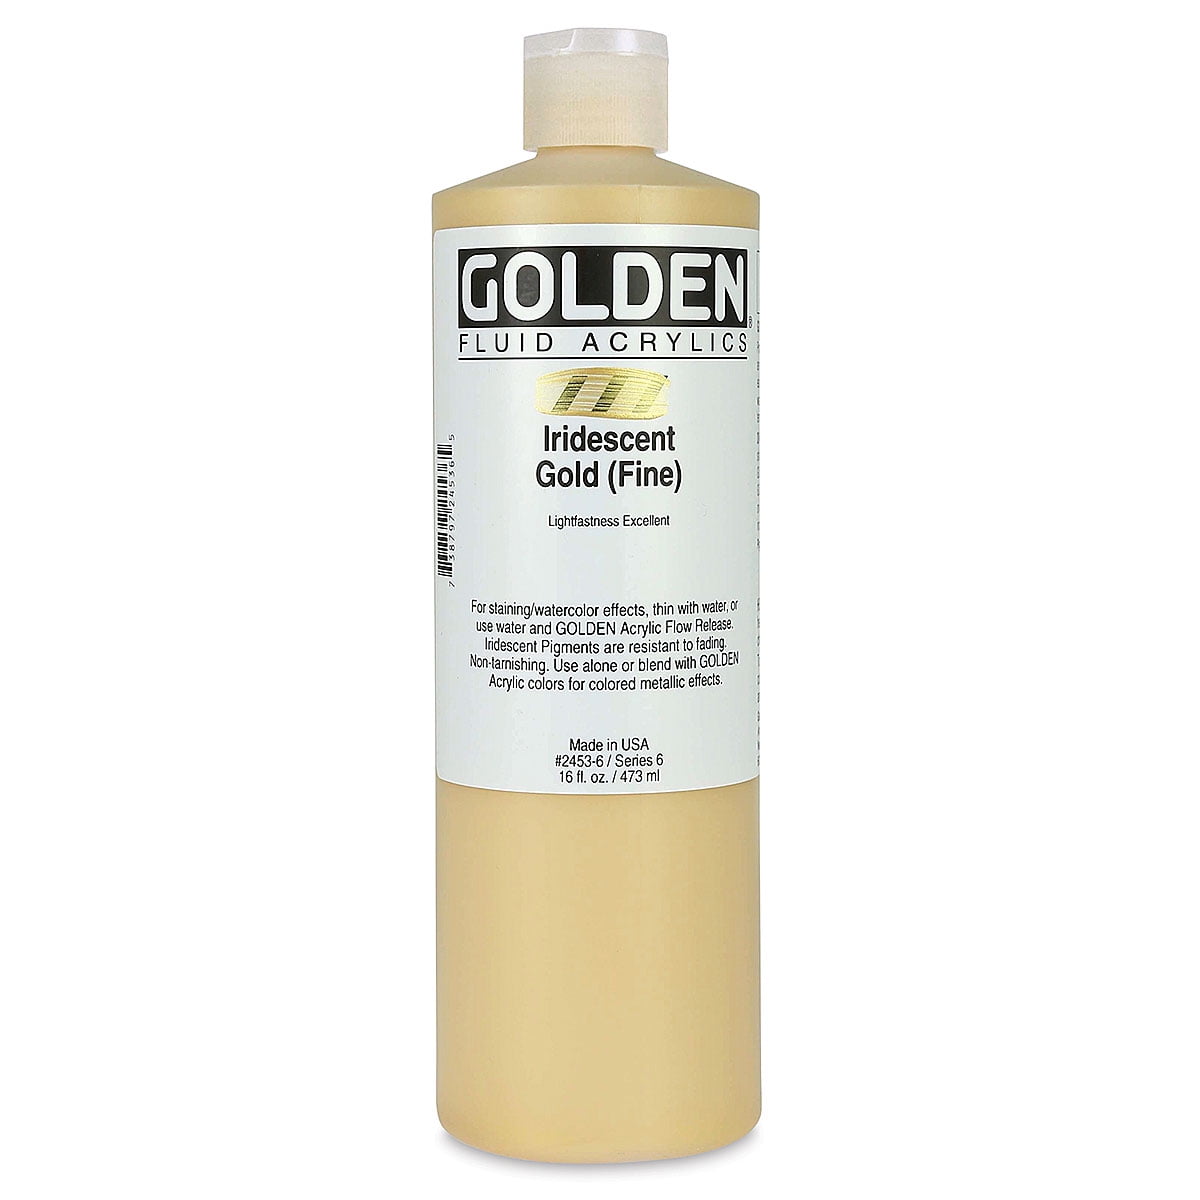 Golden Fluid Acrylic Paint, 16 oz, Iridescent Gold (Fine